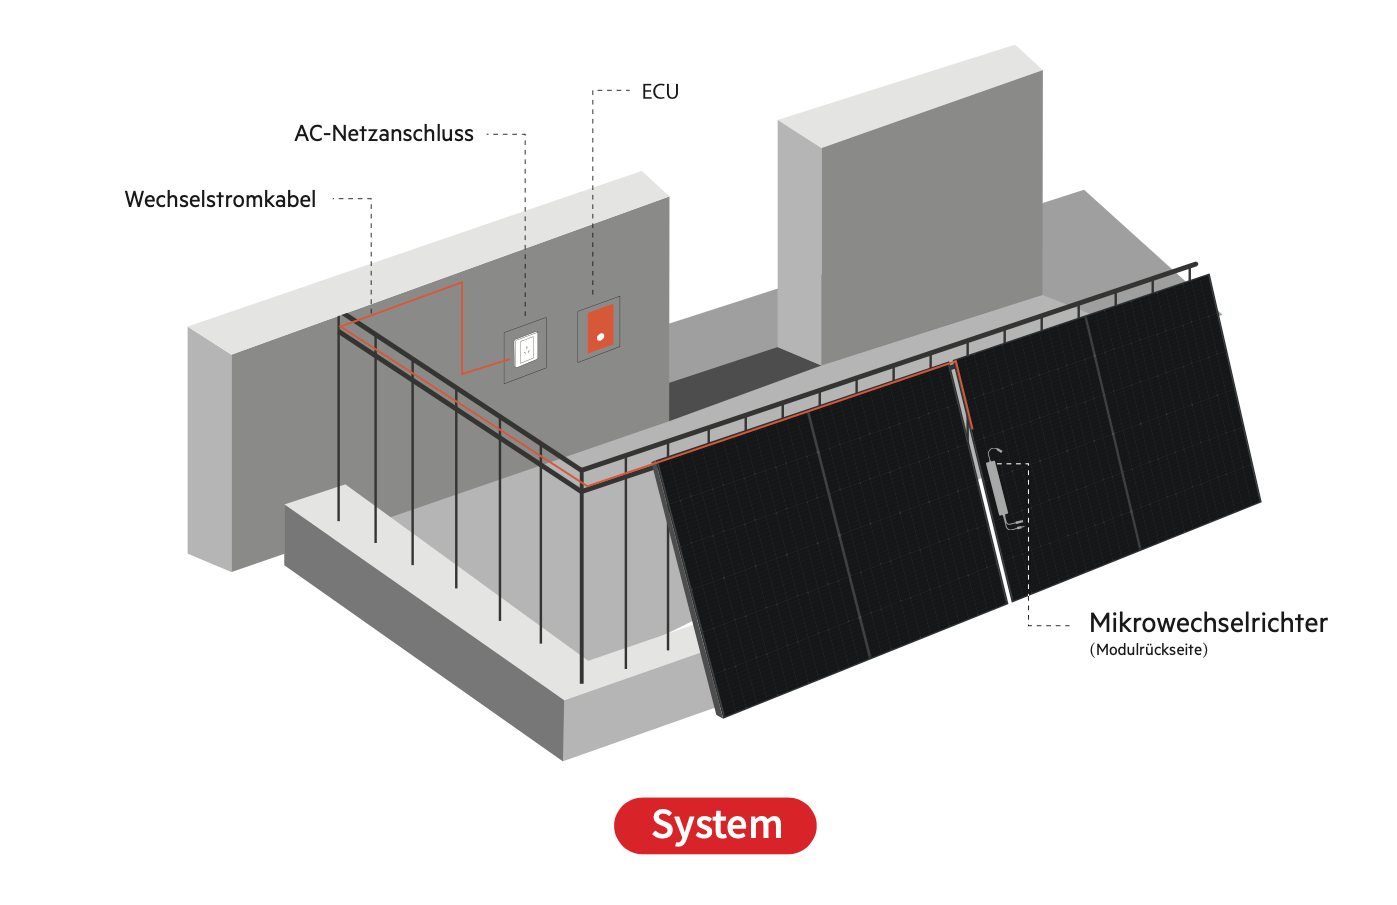 PV pour balcon - 800W - DAH Solar 